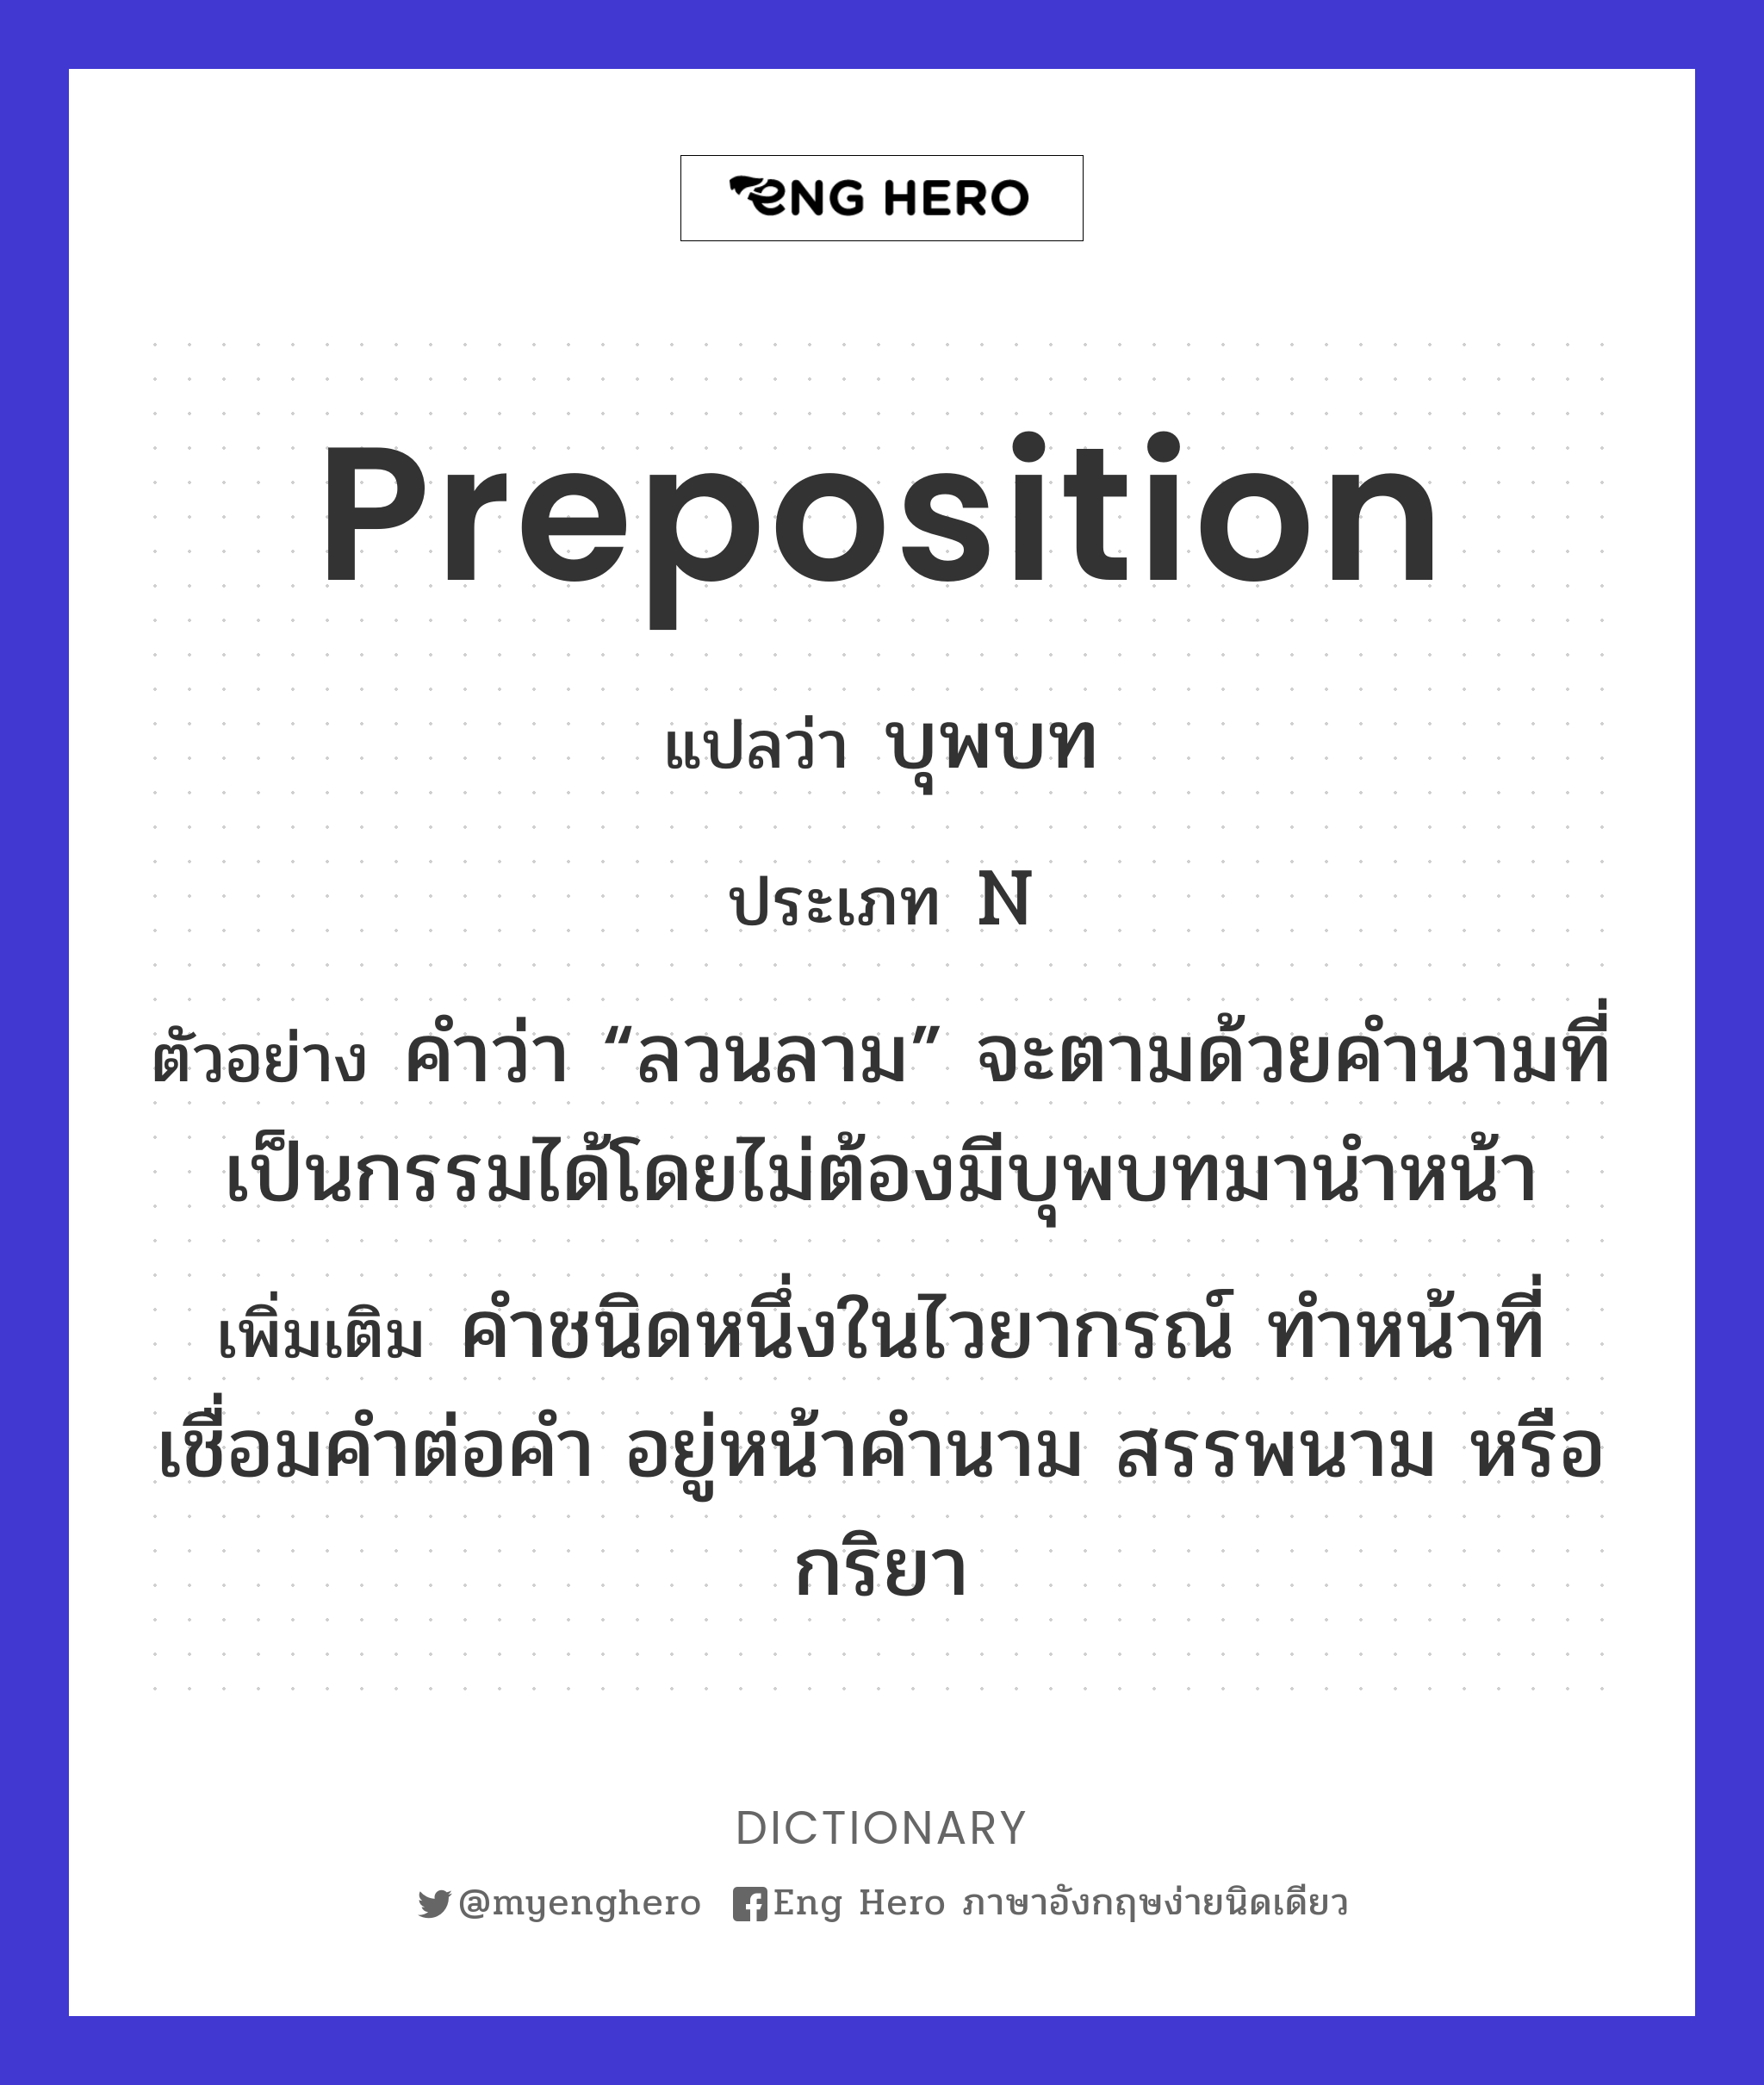 preposition